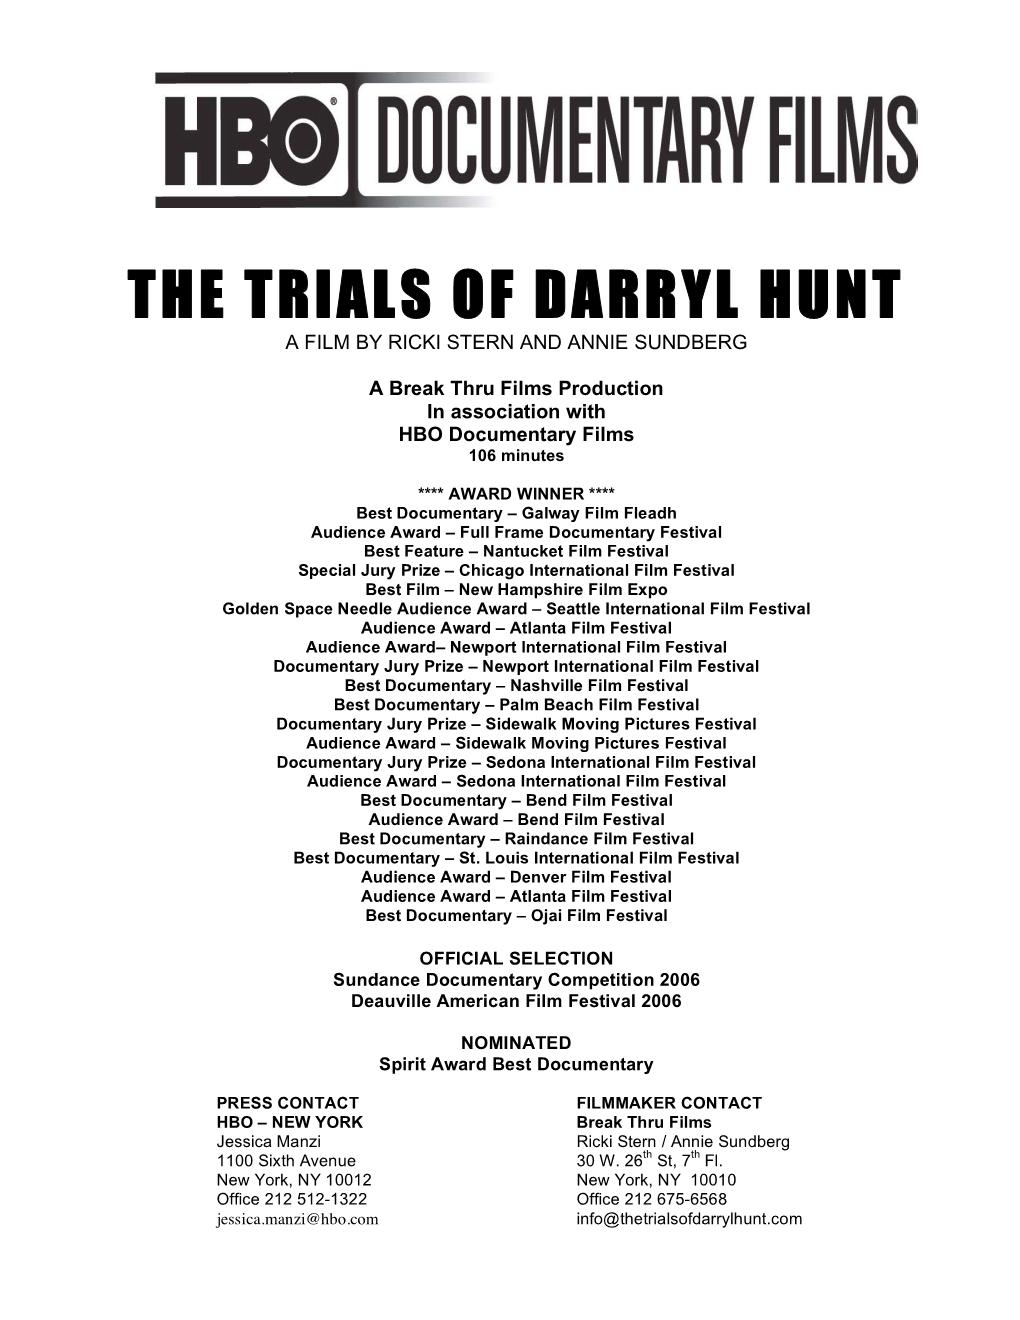 The Trials of Darryl Hunt a Film by Ricki Stern and Annie Sundberg